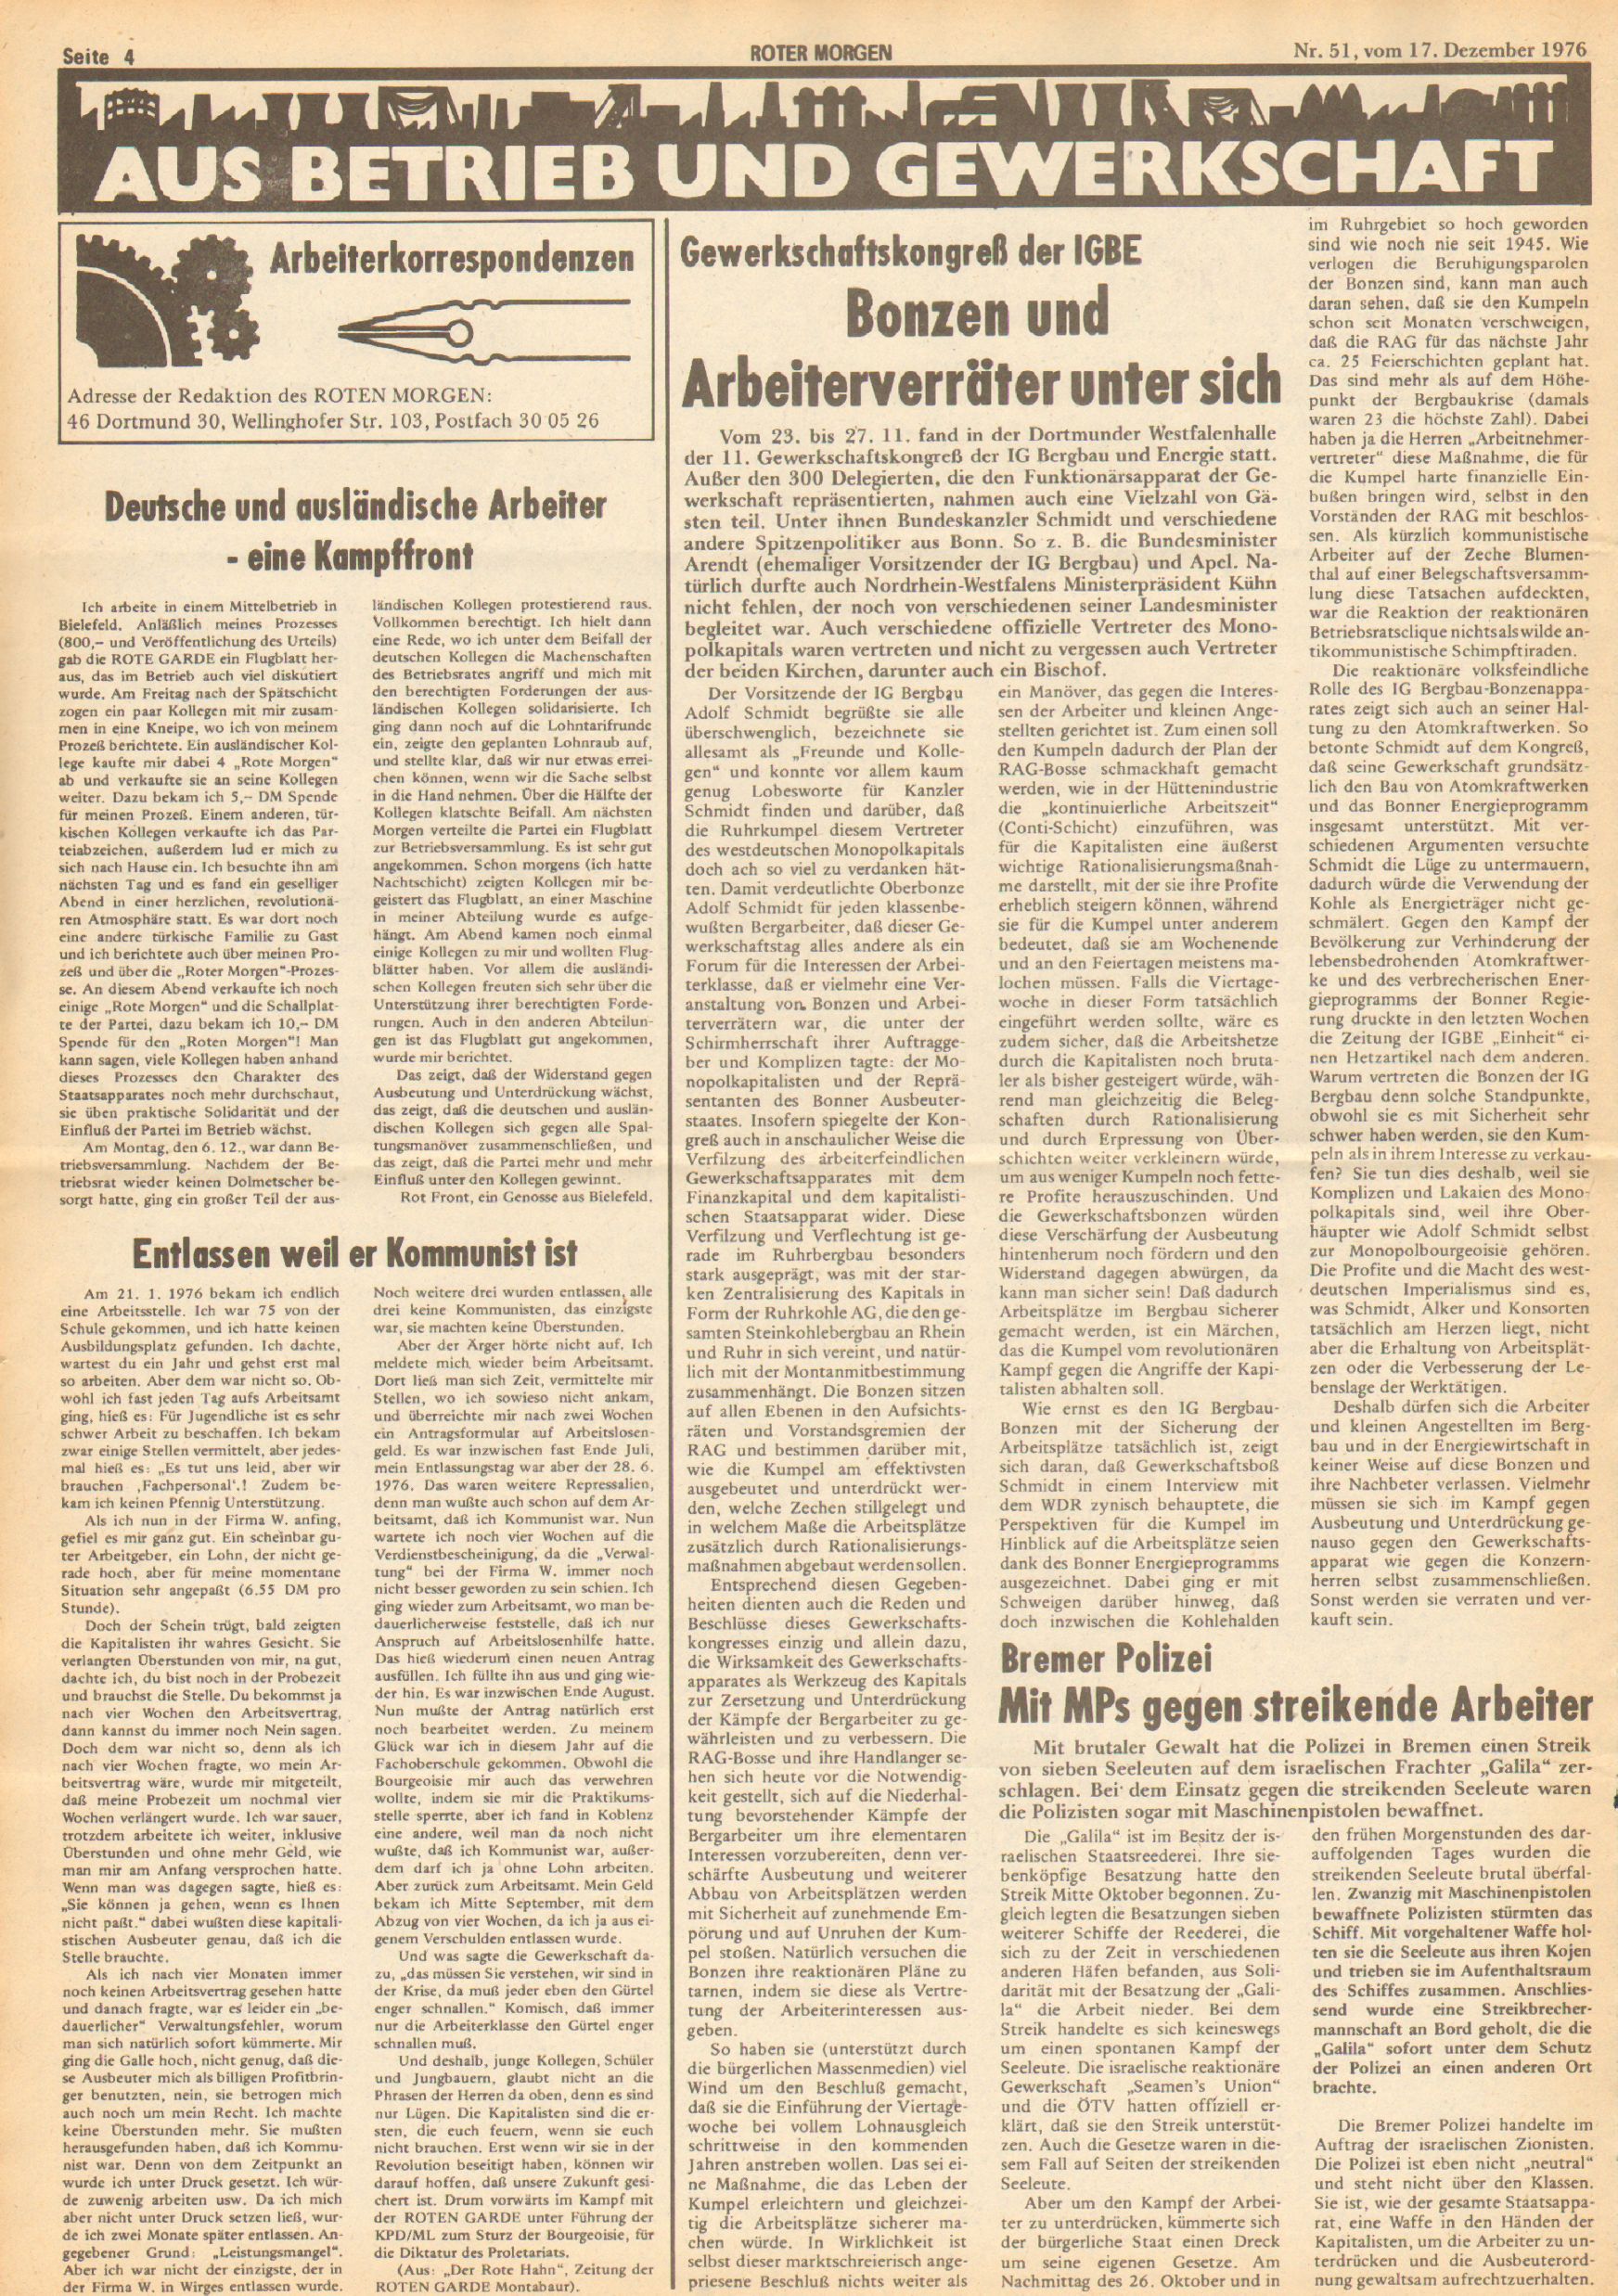 Roter Morgen, 10. Jg., 17. Dezember 1976, Nr. 51, Seite 4